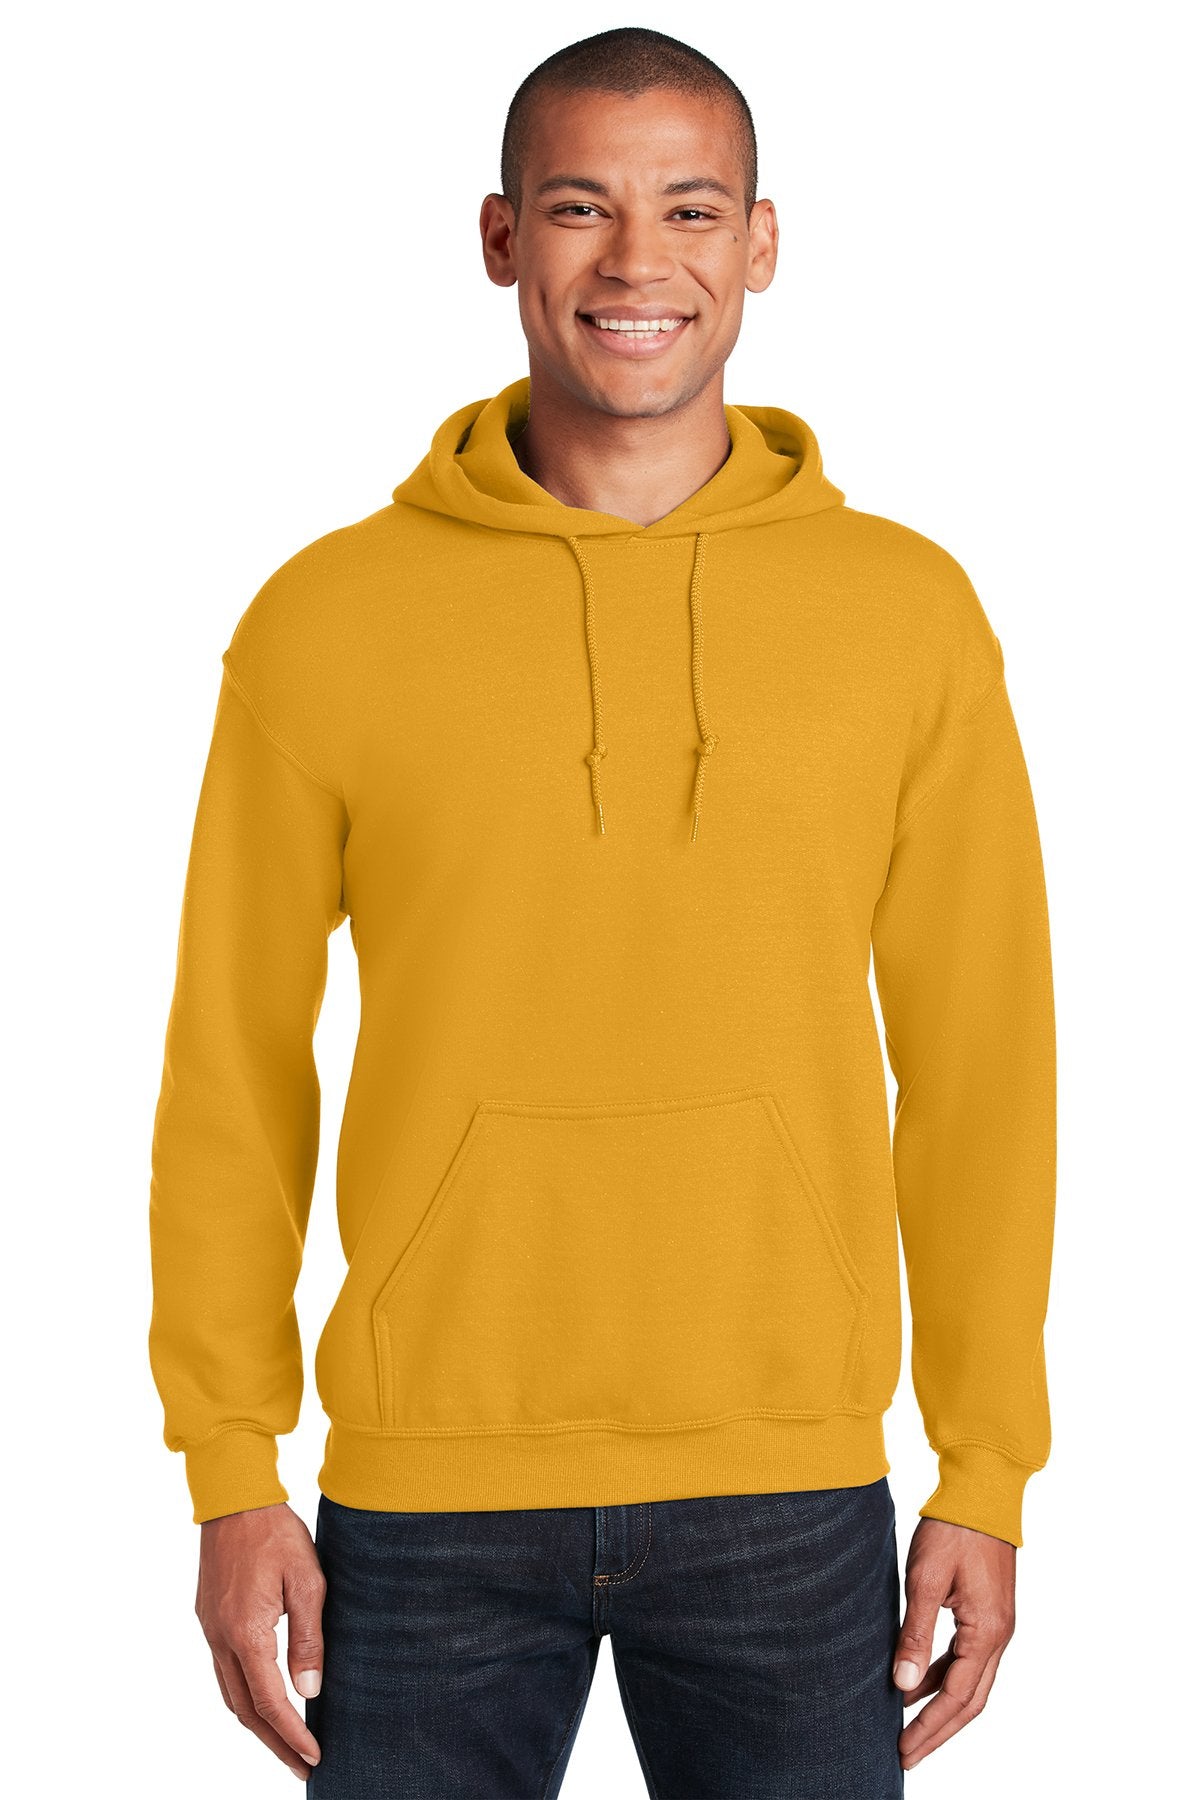 Gildan Gold 18500 business sweatshirts with logo